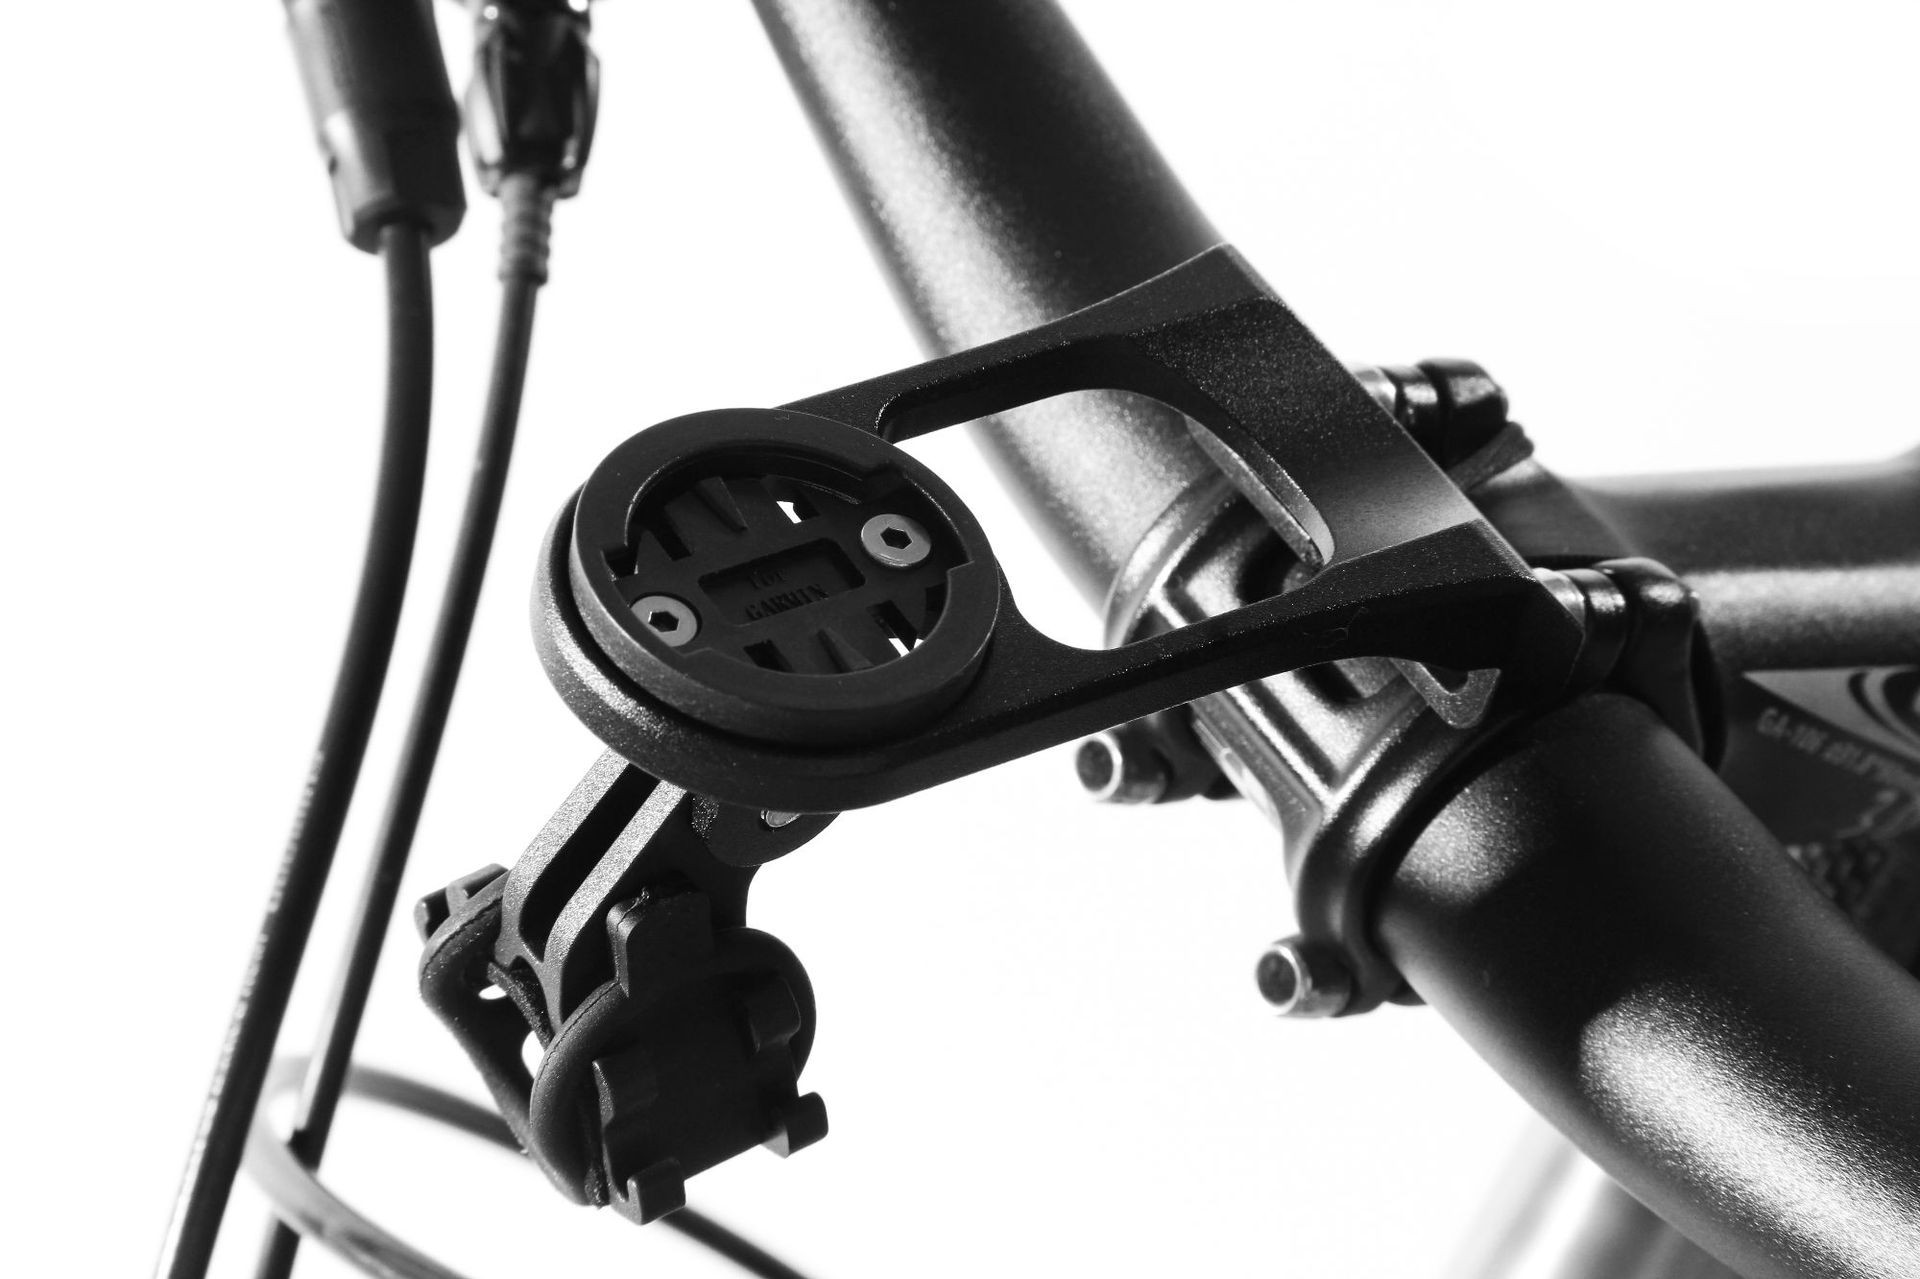 bicycle headlight bracket